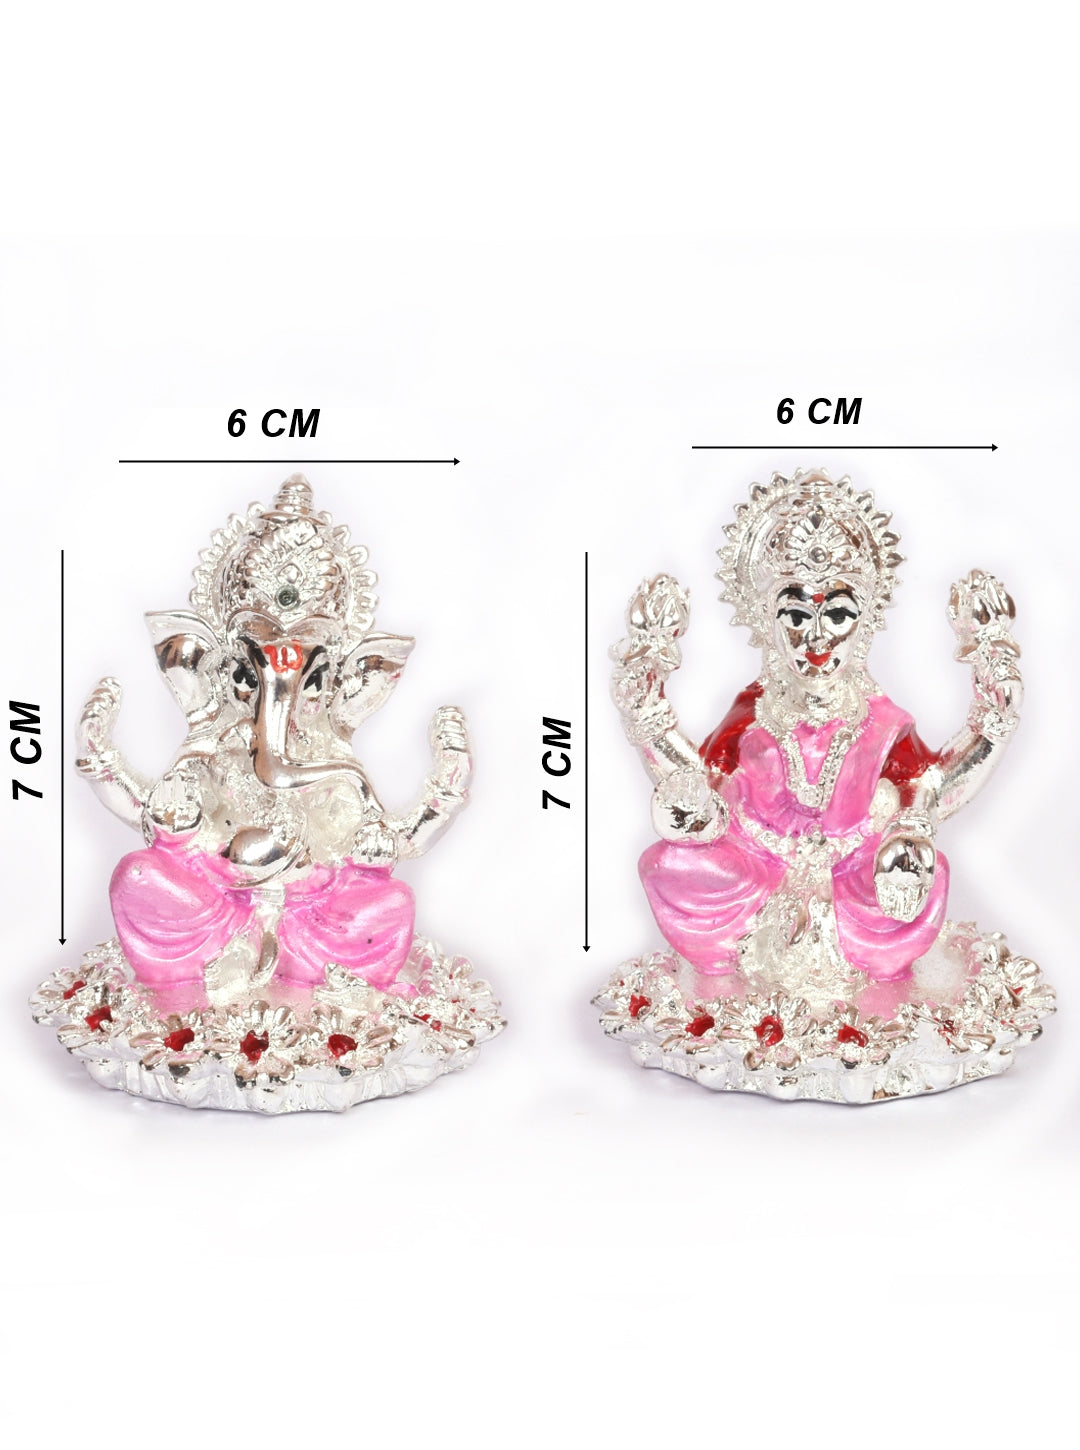 Laxmi ganesh Silver Plated Marble idol Height 7cm